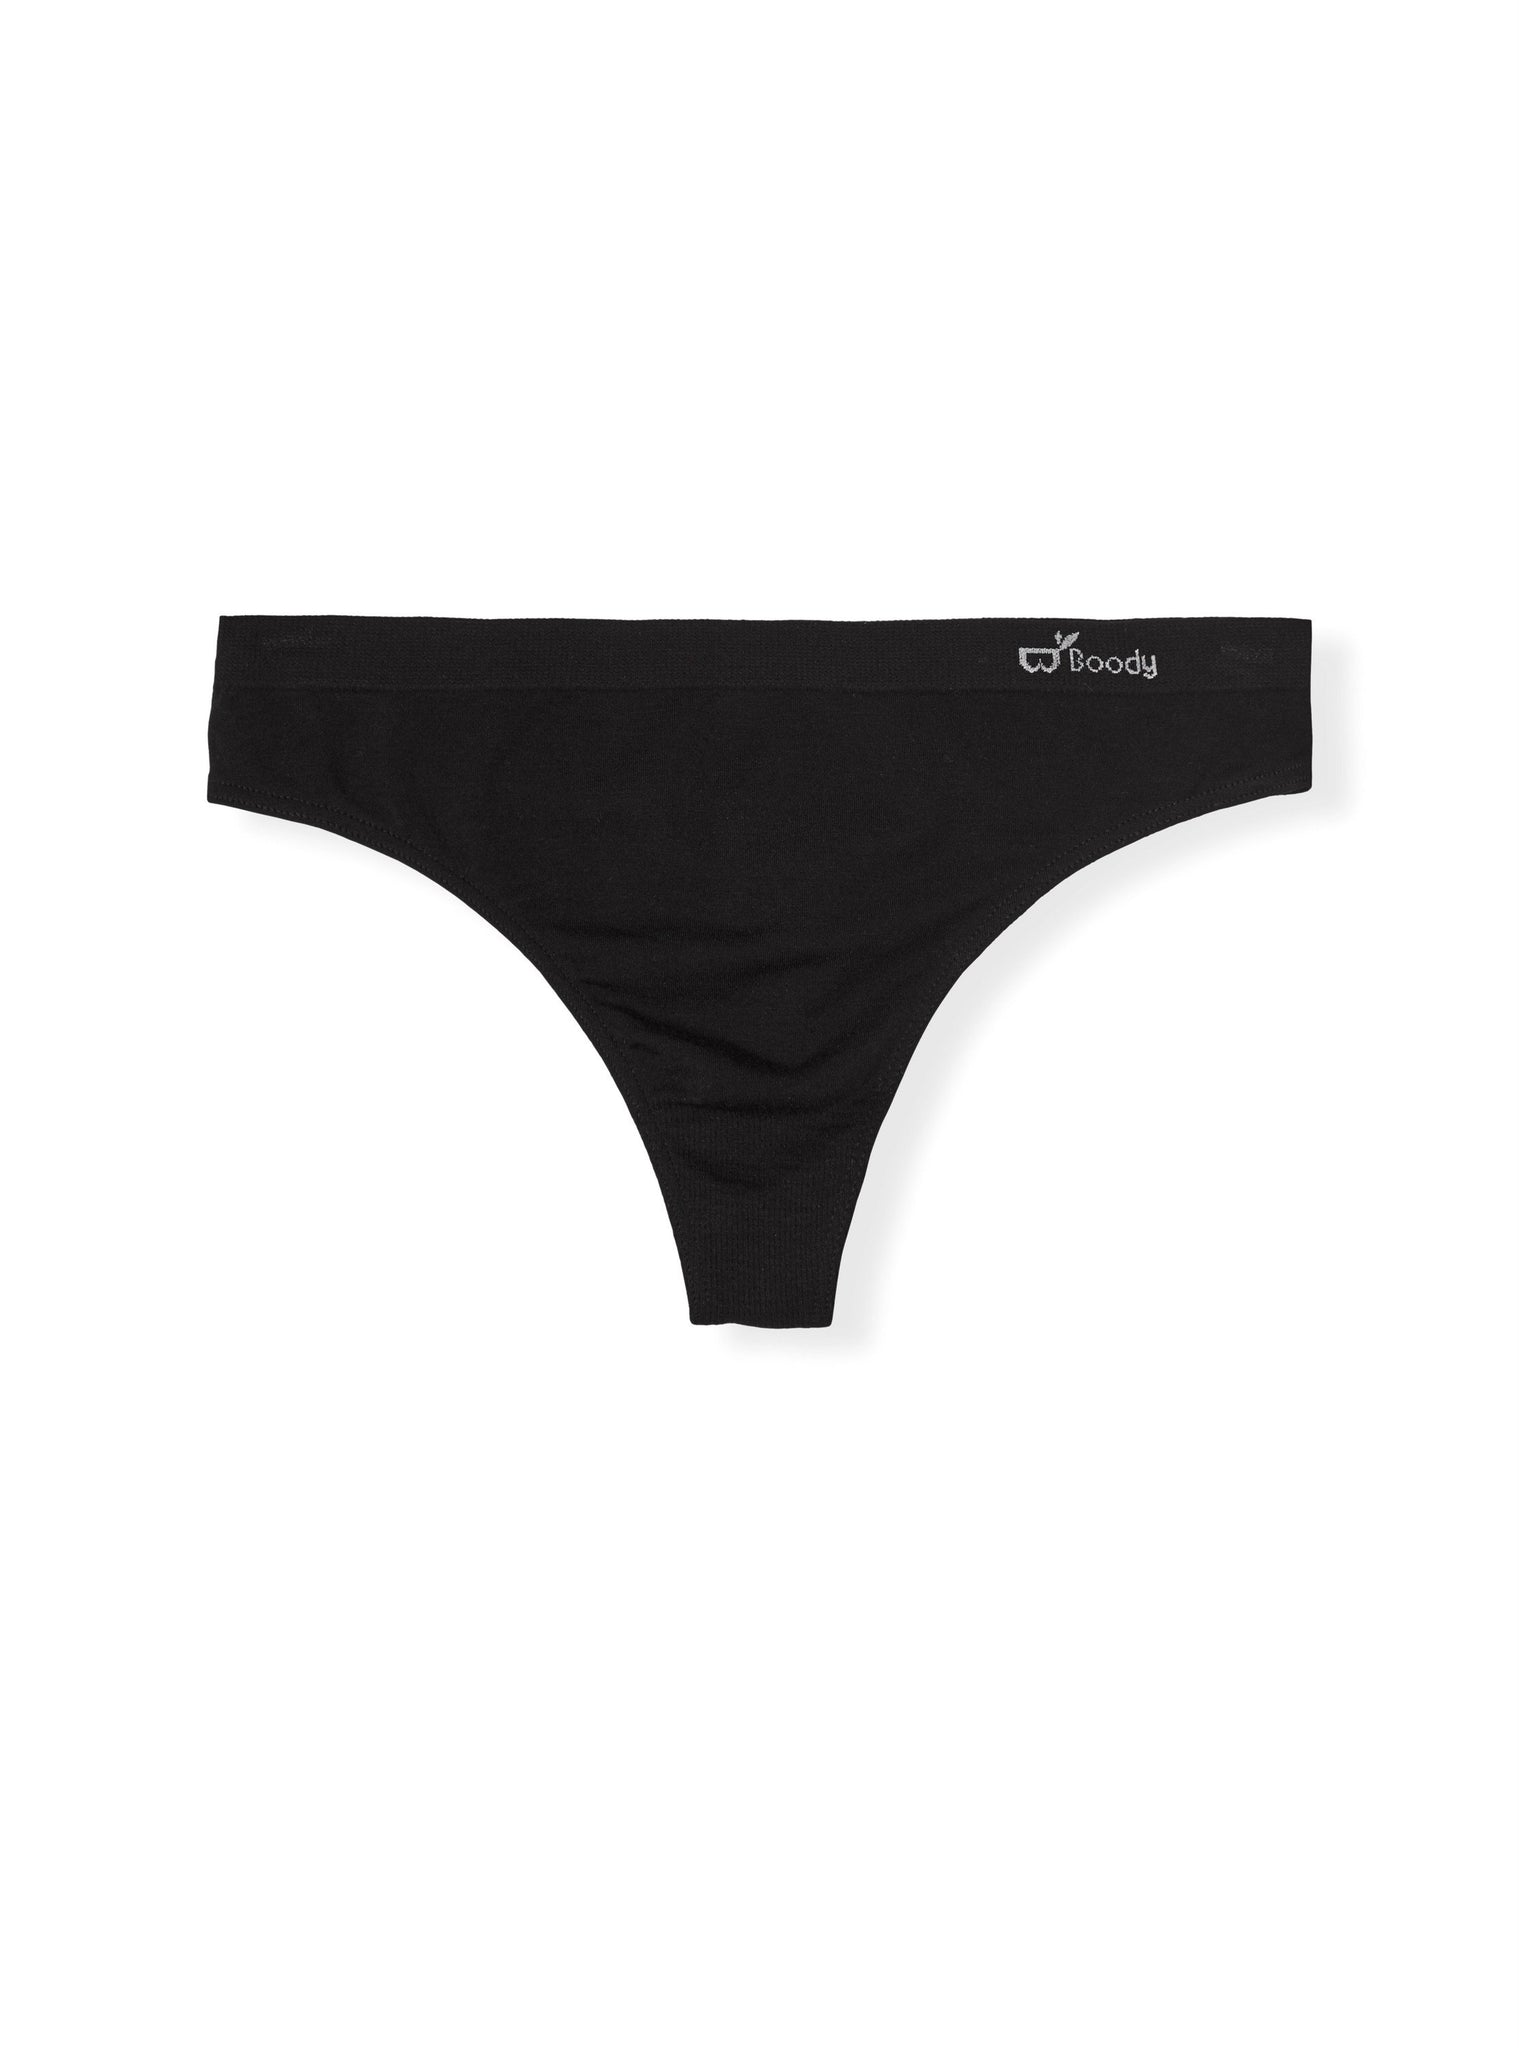 Generic G-string Elastic Underwear Black